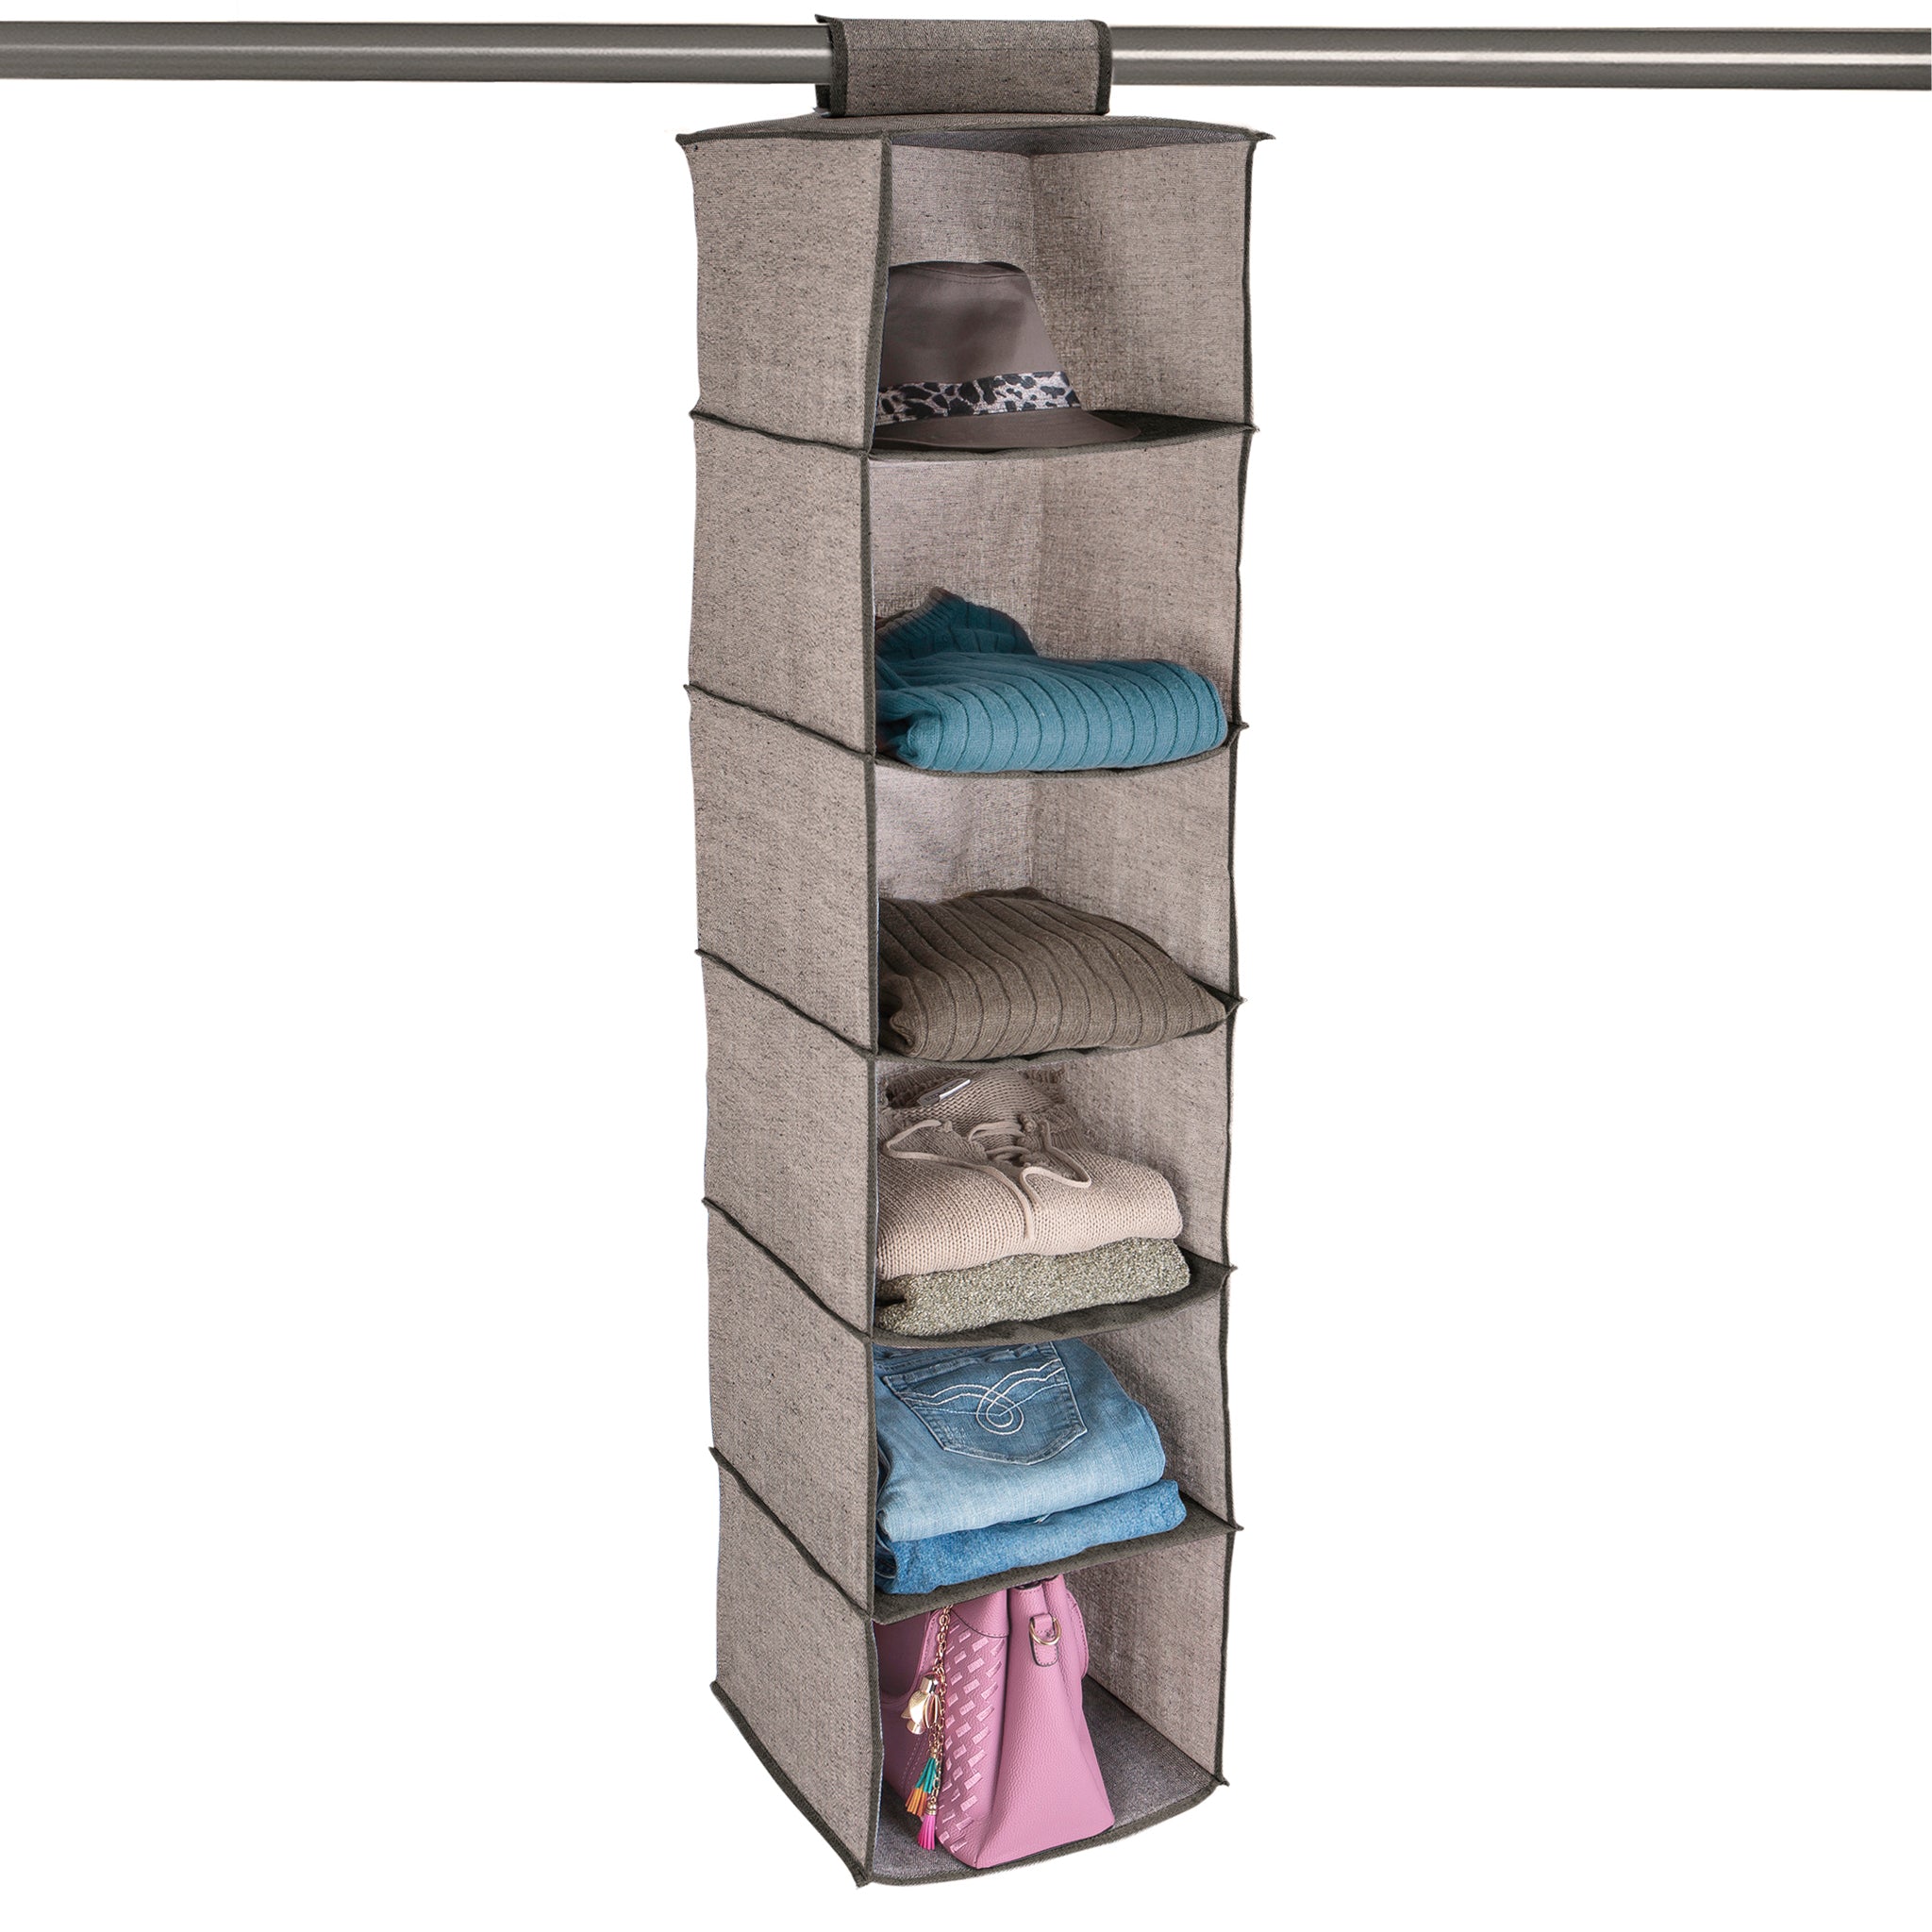 6 Shelf Hanging Closet Organizer With Drawers, Closet Hanging